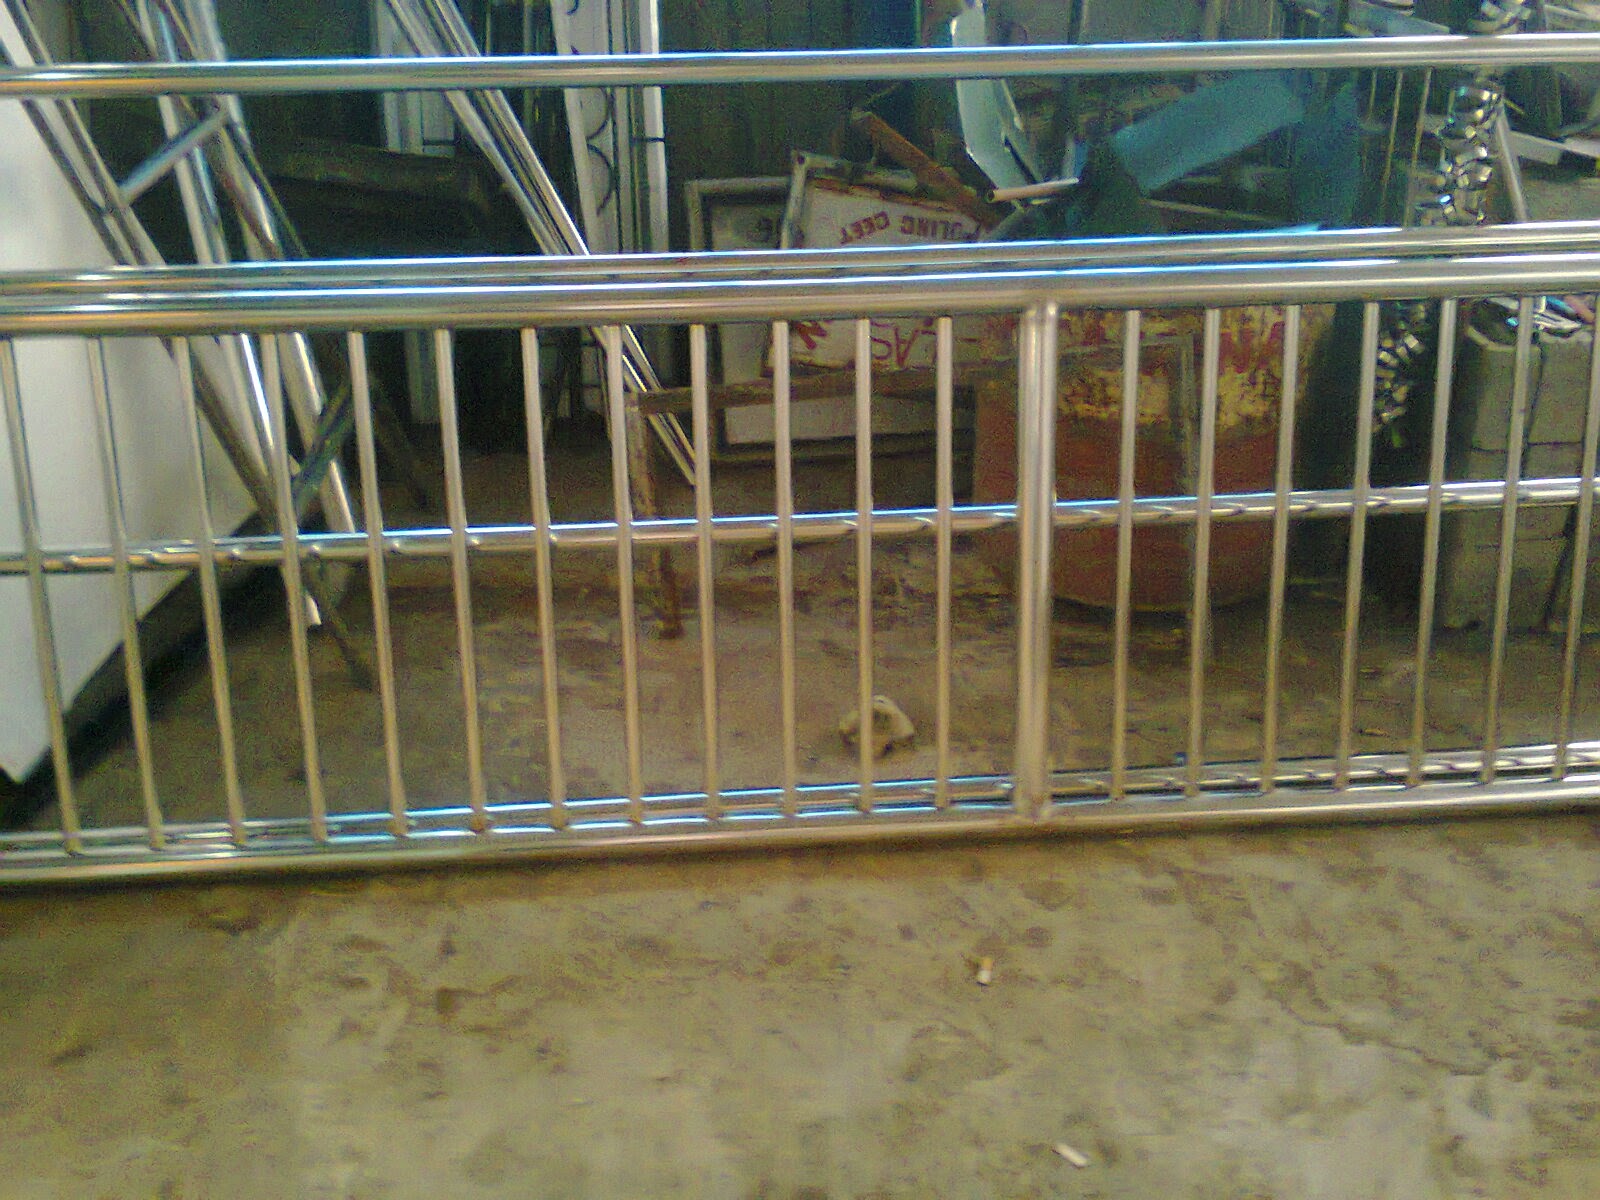 ABADI JAYA STEEL buat pagar  besi  galvanis  minimalis  murah di karawang